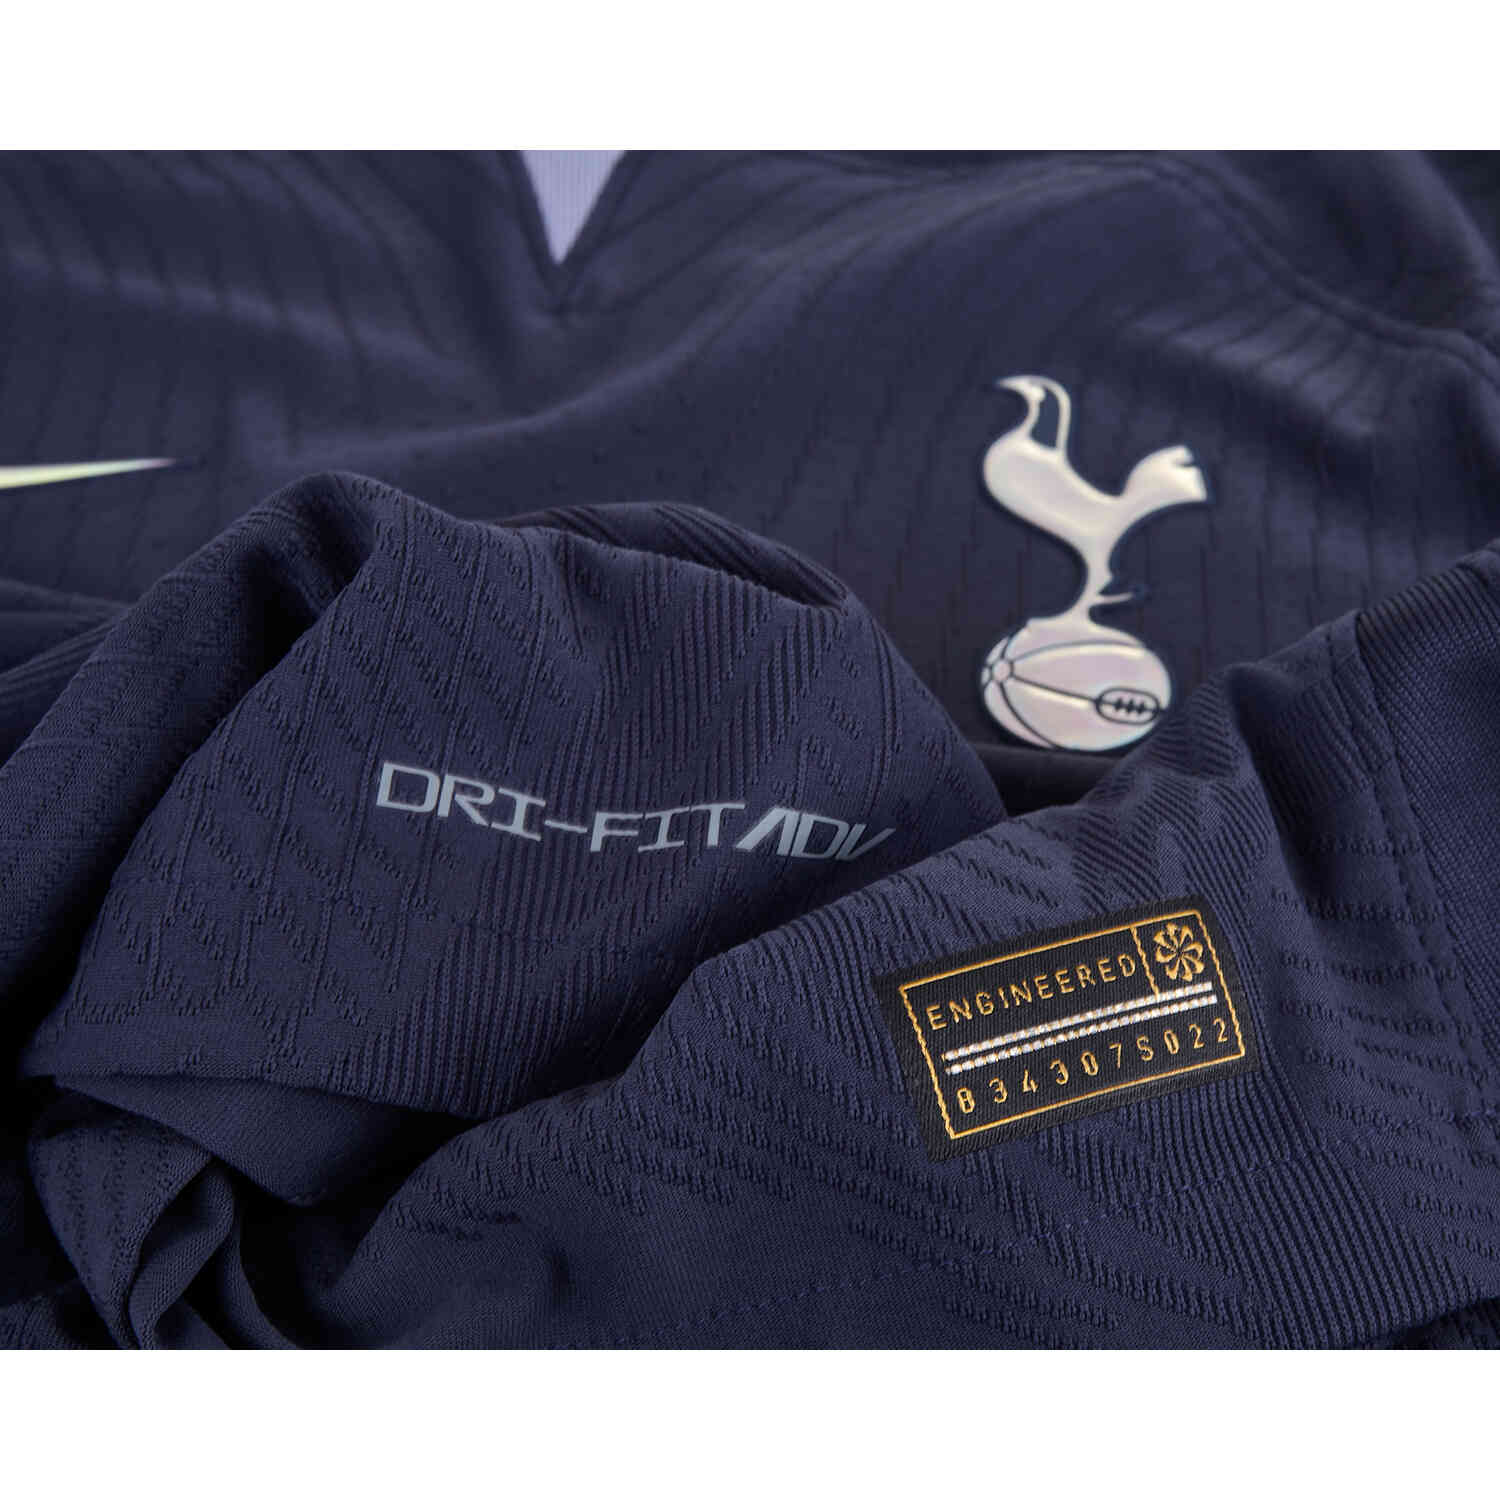 2023/2024 Nike Tottenham Away Match Jersey